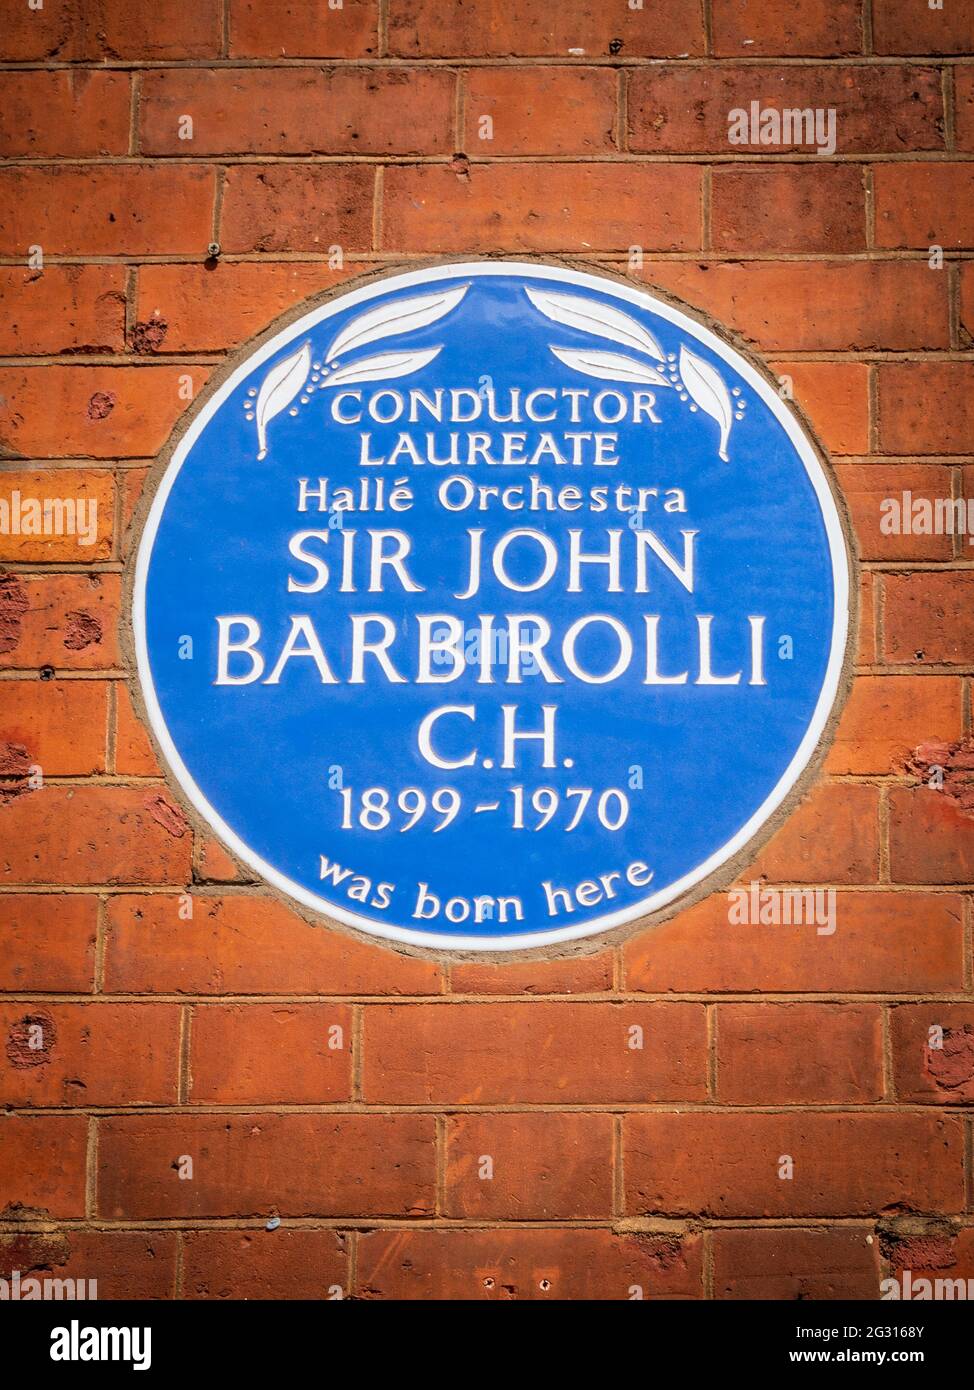 Sir John Barbirolli Blue plaque Southampton Row Londres - Conductor Laureate Hallé Orchestra Sir John Barbirolli C.H.1899-1970 est né ici. Banque D'Images